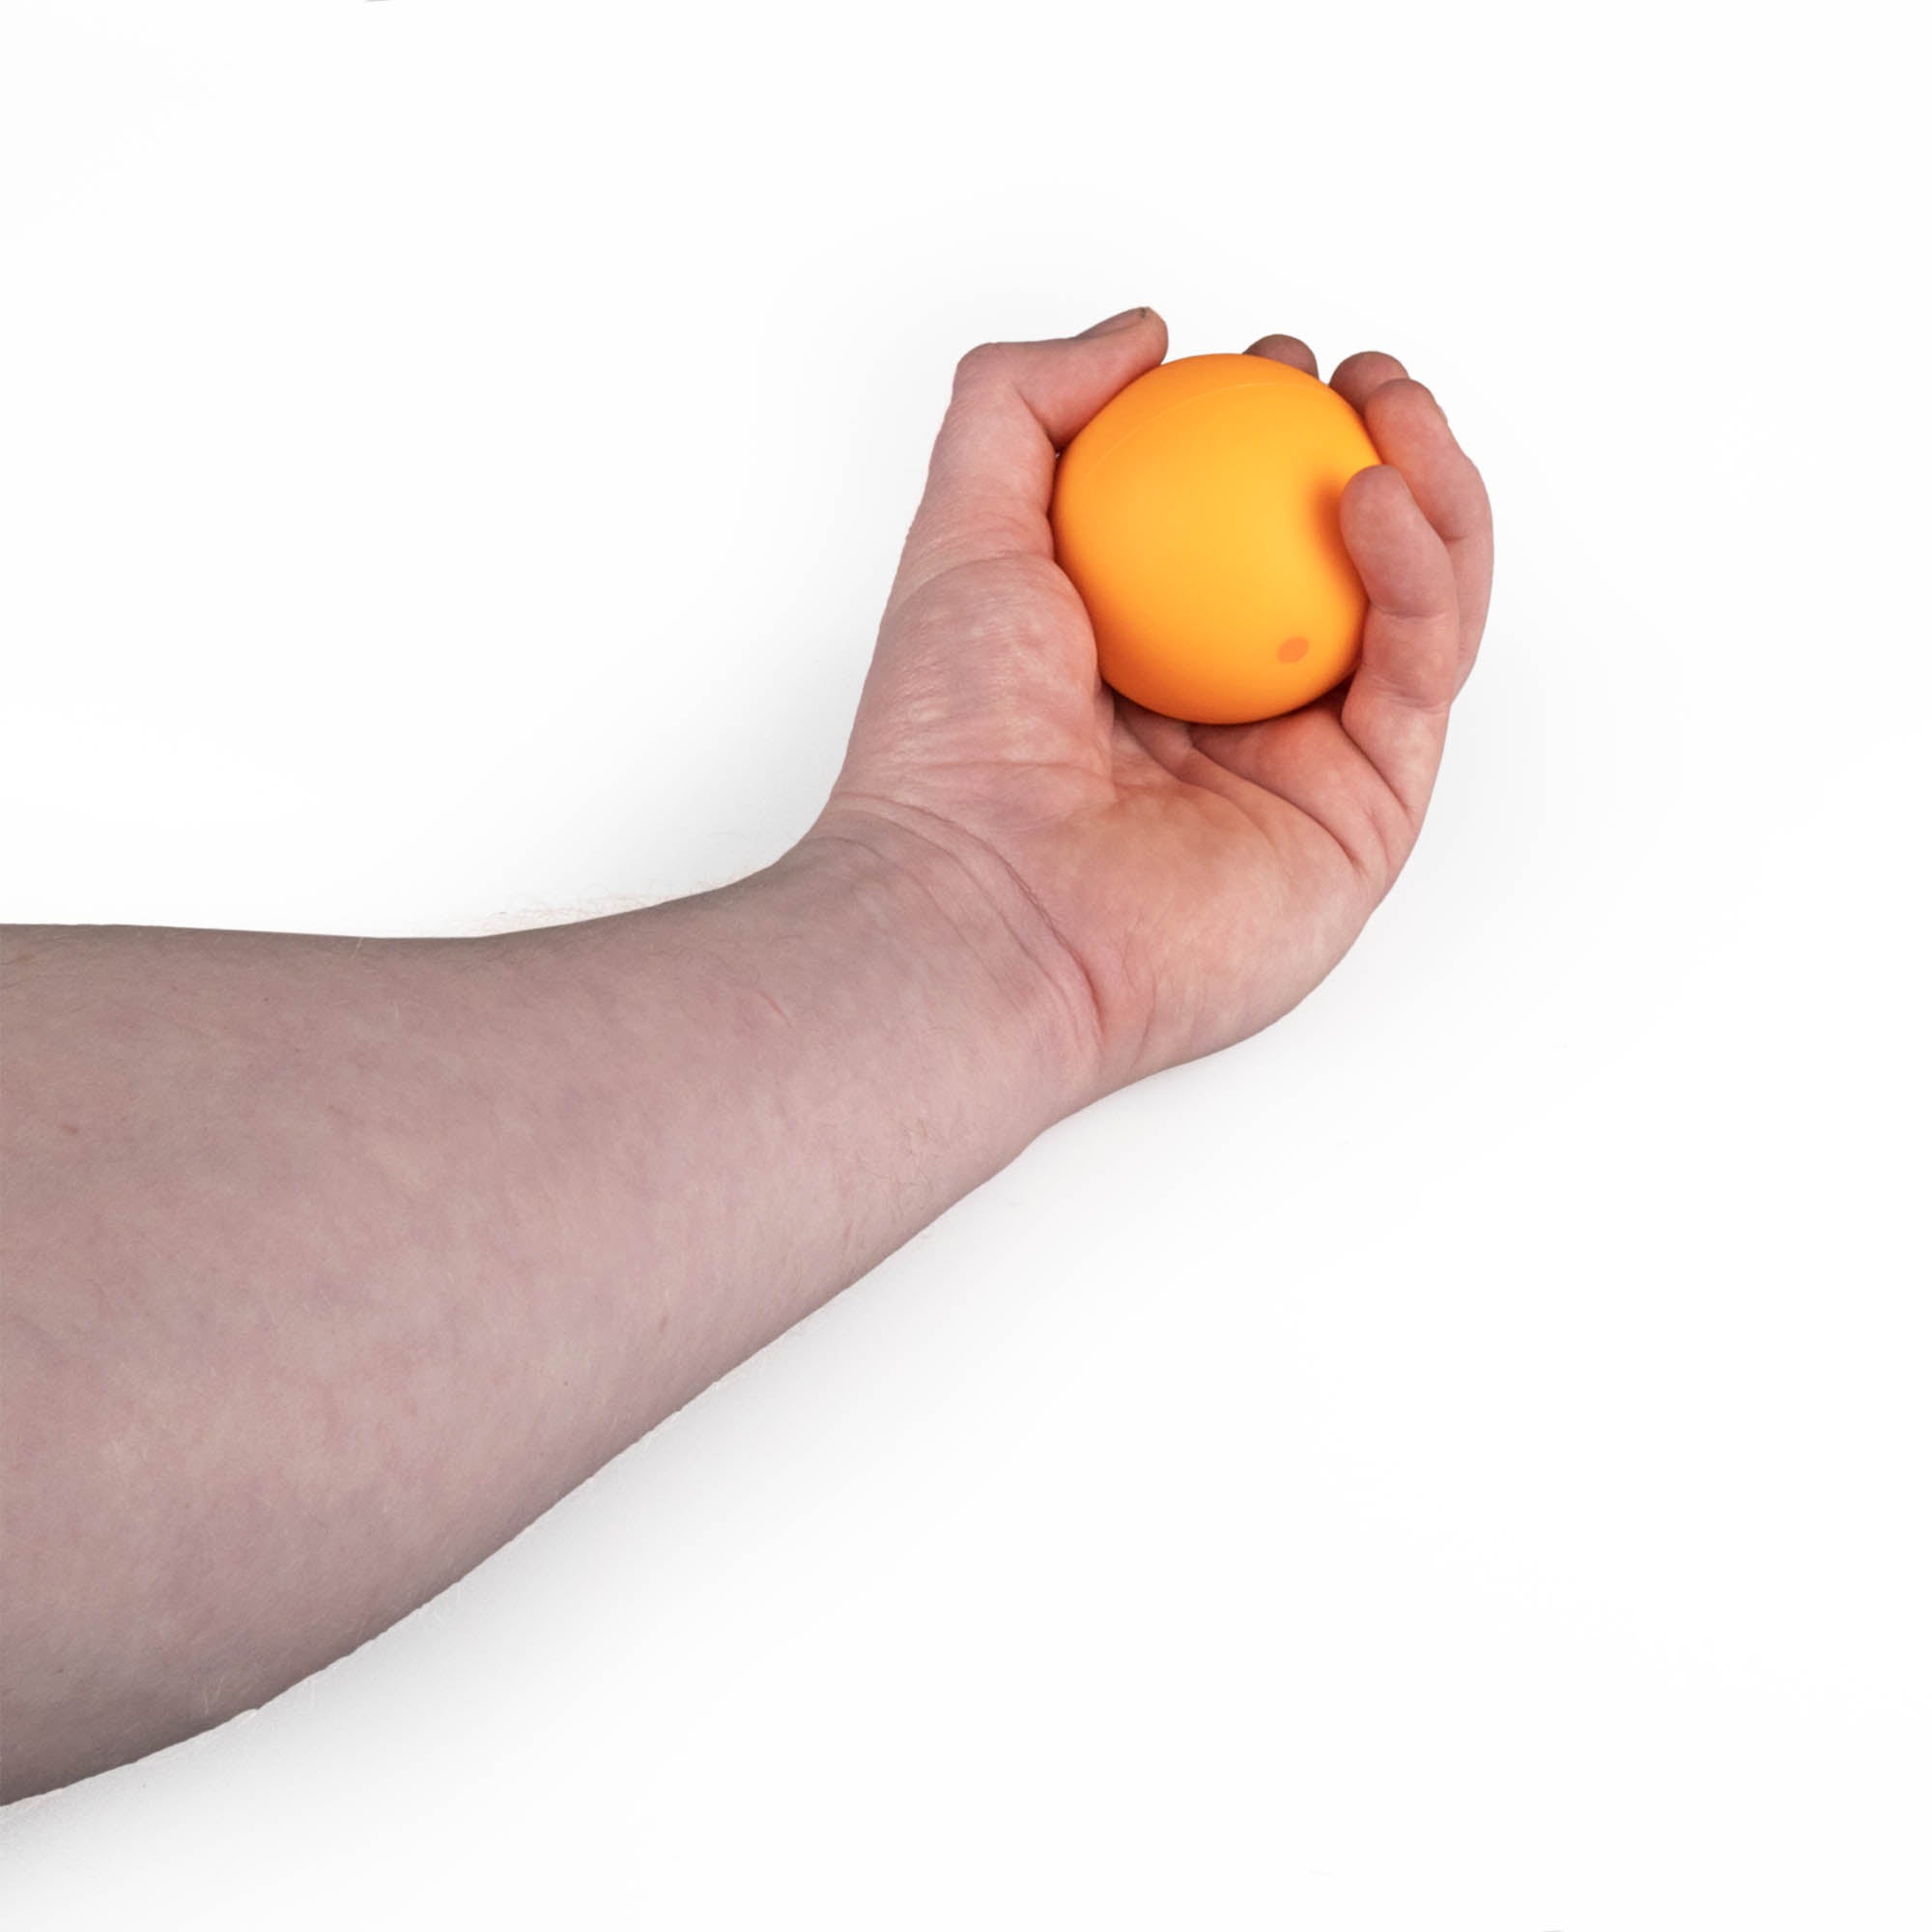 MMX 62mm Juggling ball orange in hand